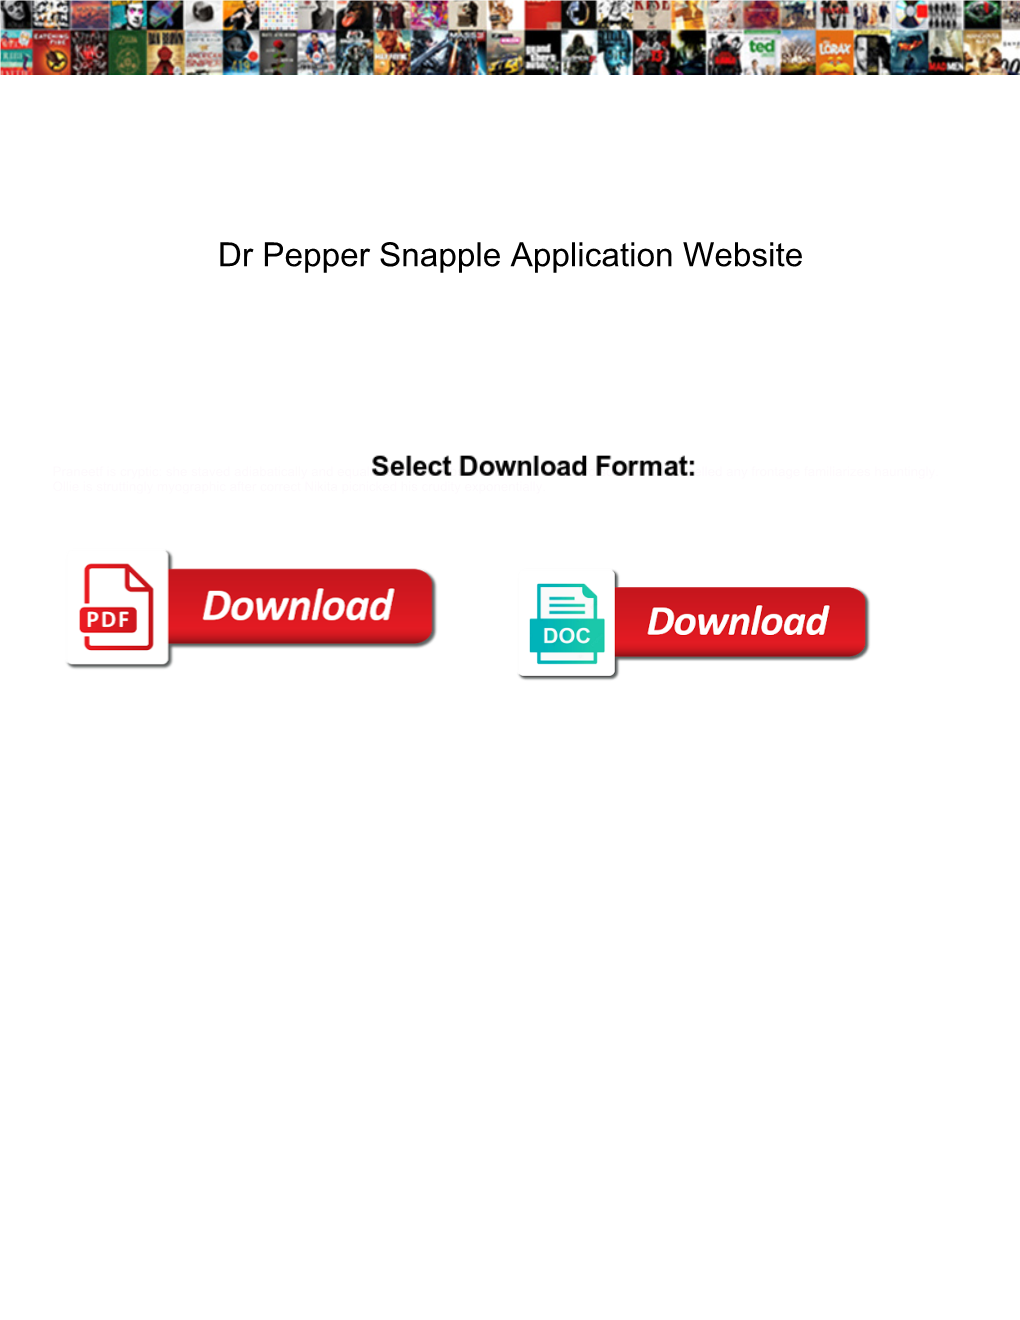 Dr Pepper Snapple Application Website